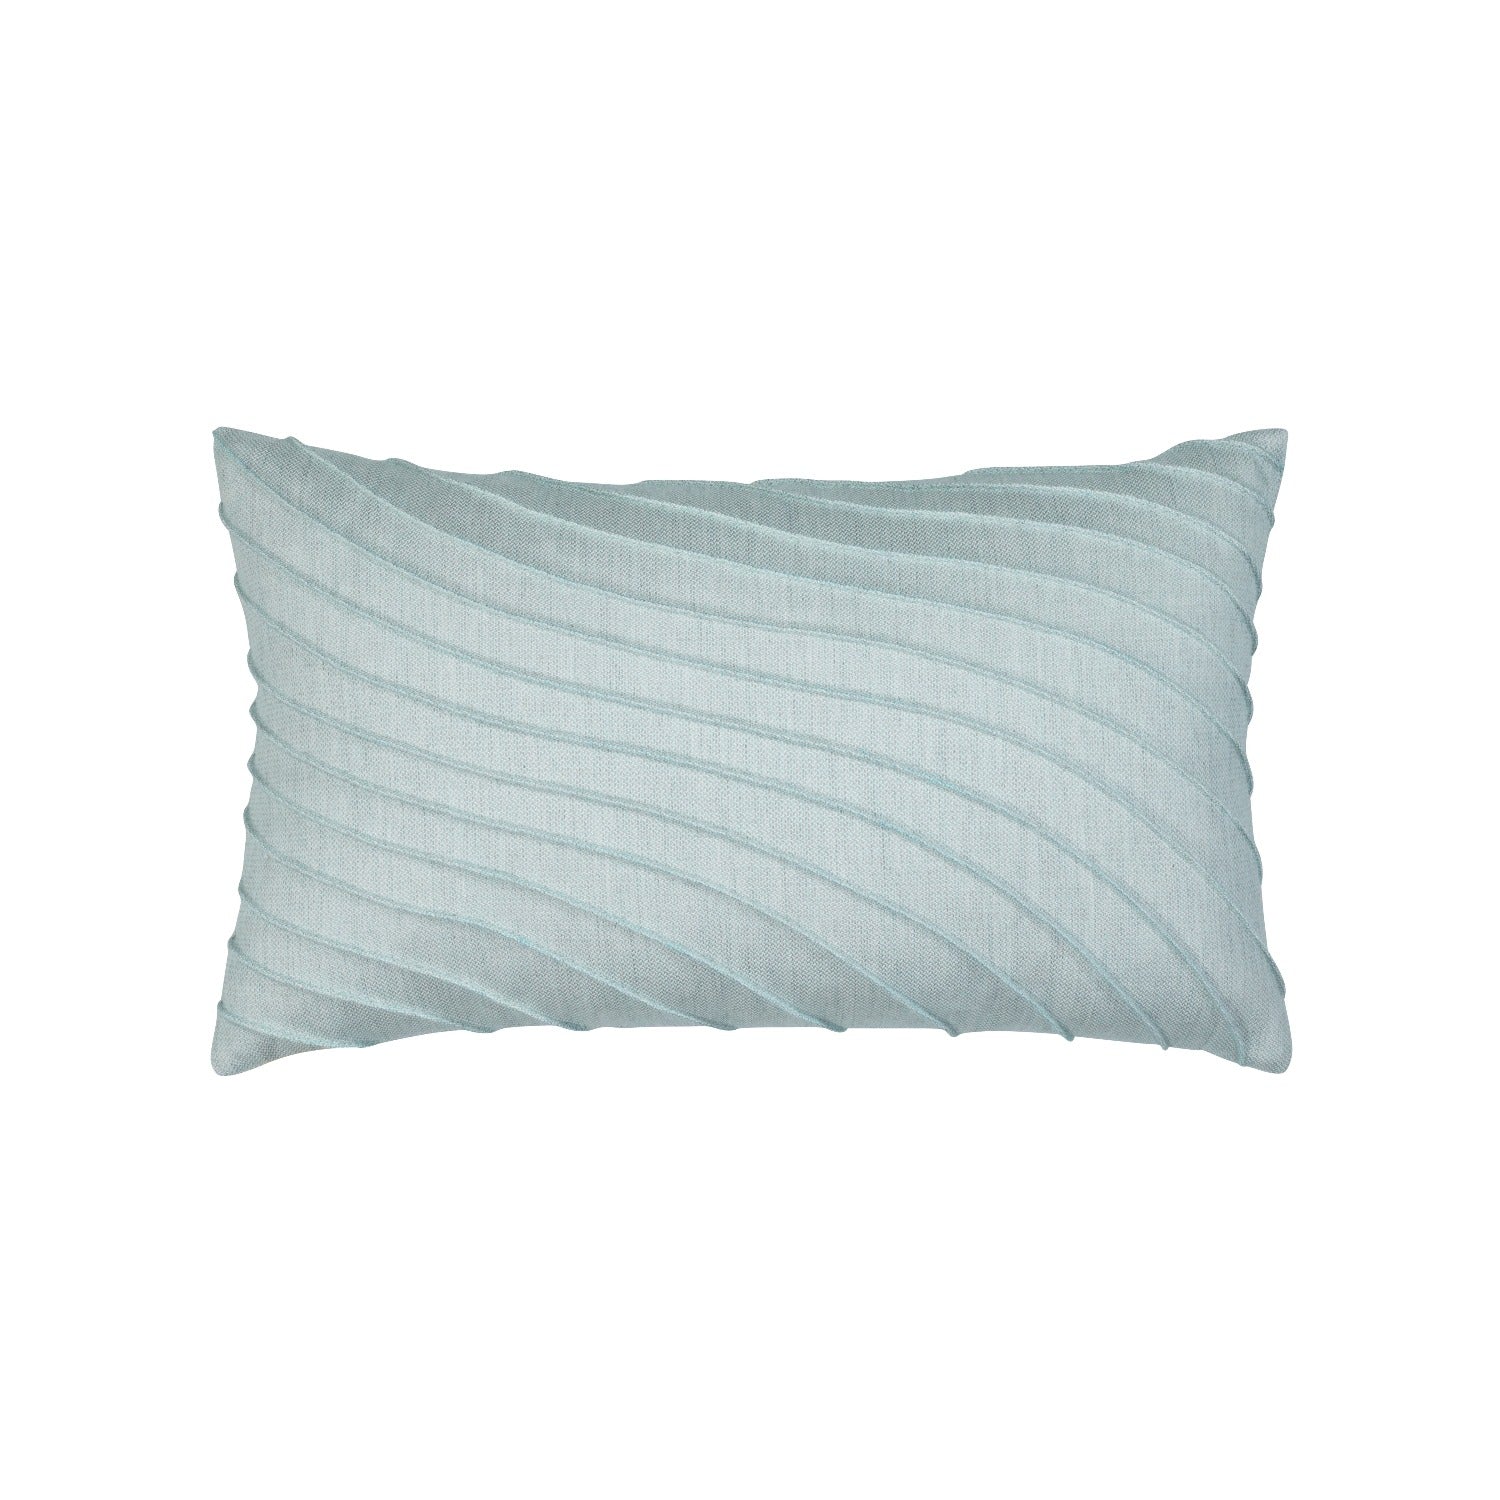 Elaine Smith Tidal Glacier Lumbar Pillow Throw Pillows 12041460